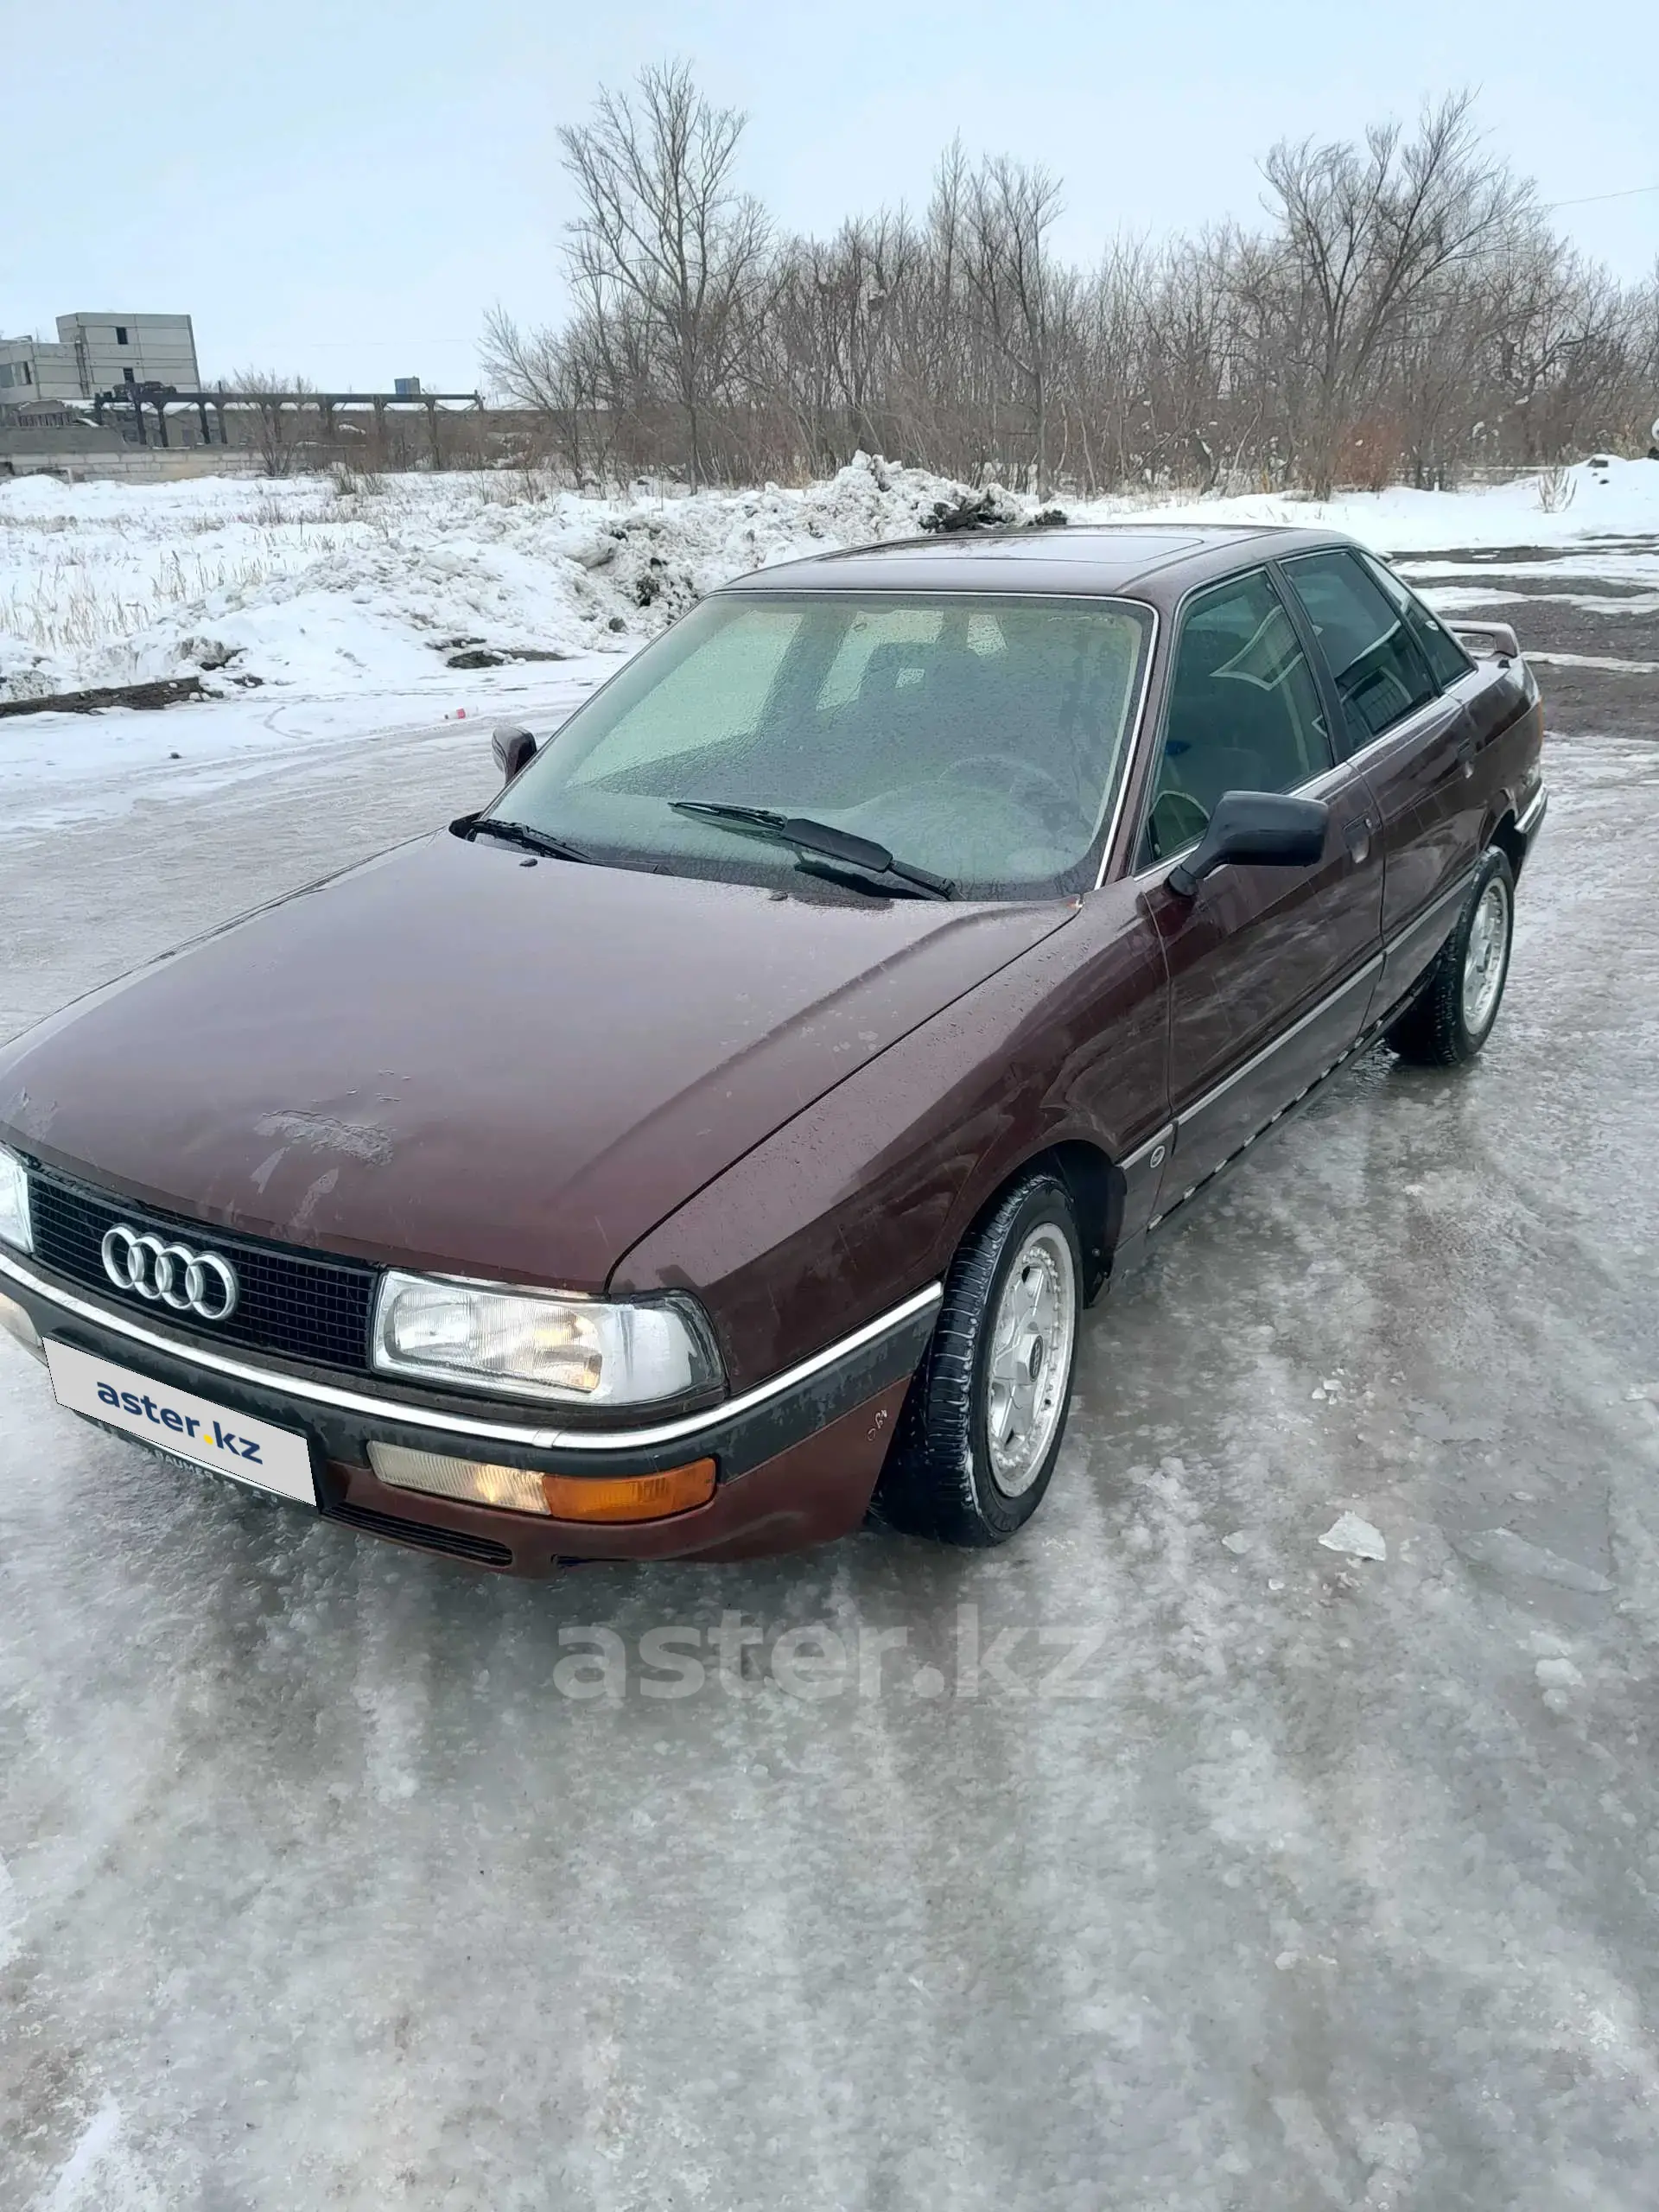 Audi 90 1991